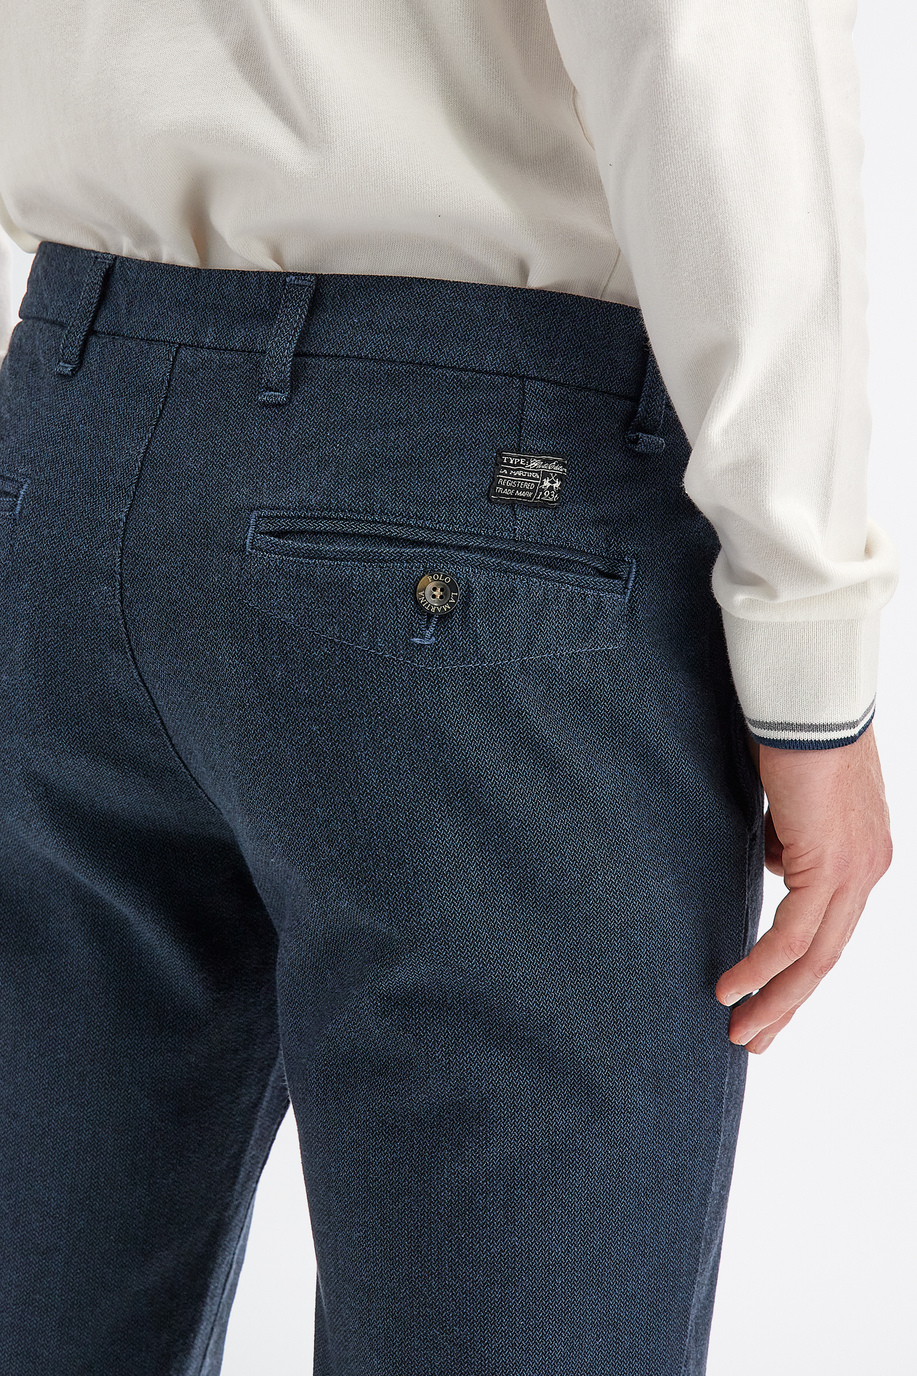 Men’s trousers 5 pockets regular fit cotton - Elegant looks for him | La Martina - Official Online Shop